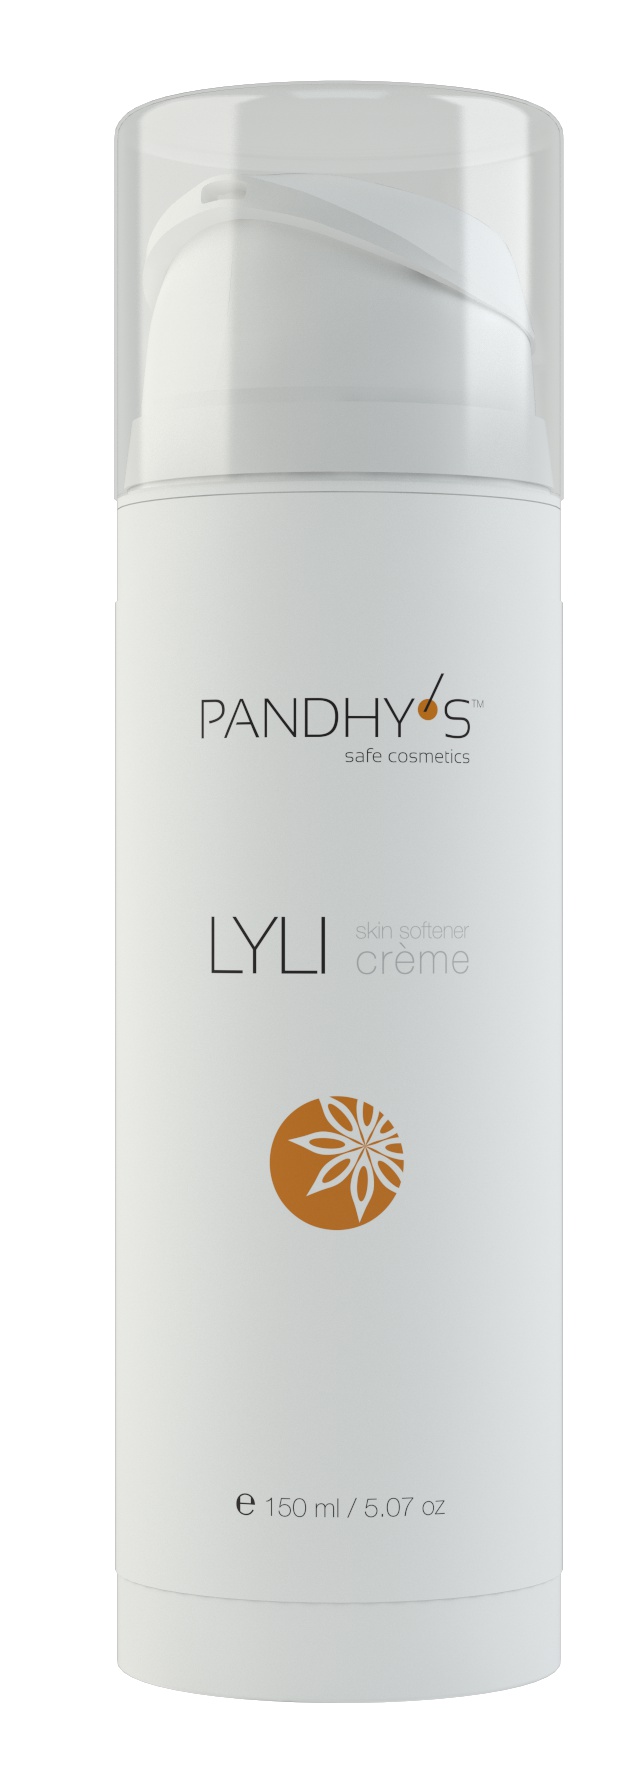 Pandhy’s Lyli Skin Softener Crème